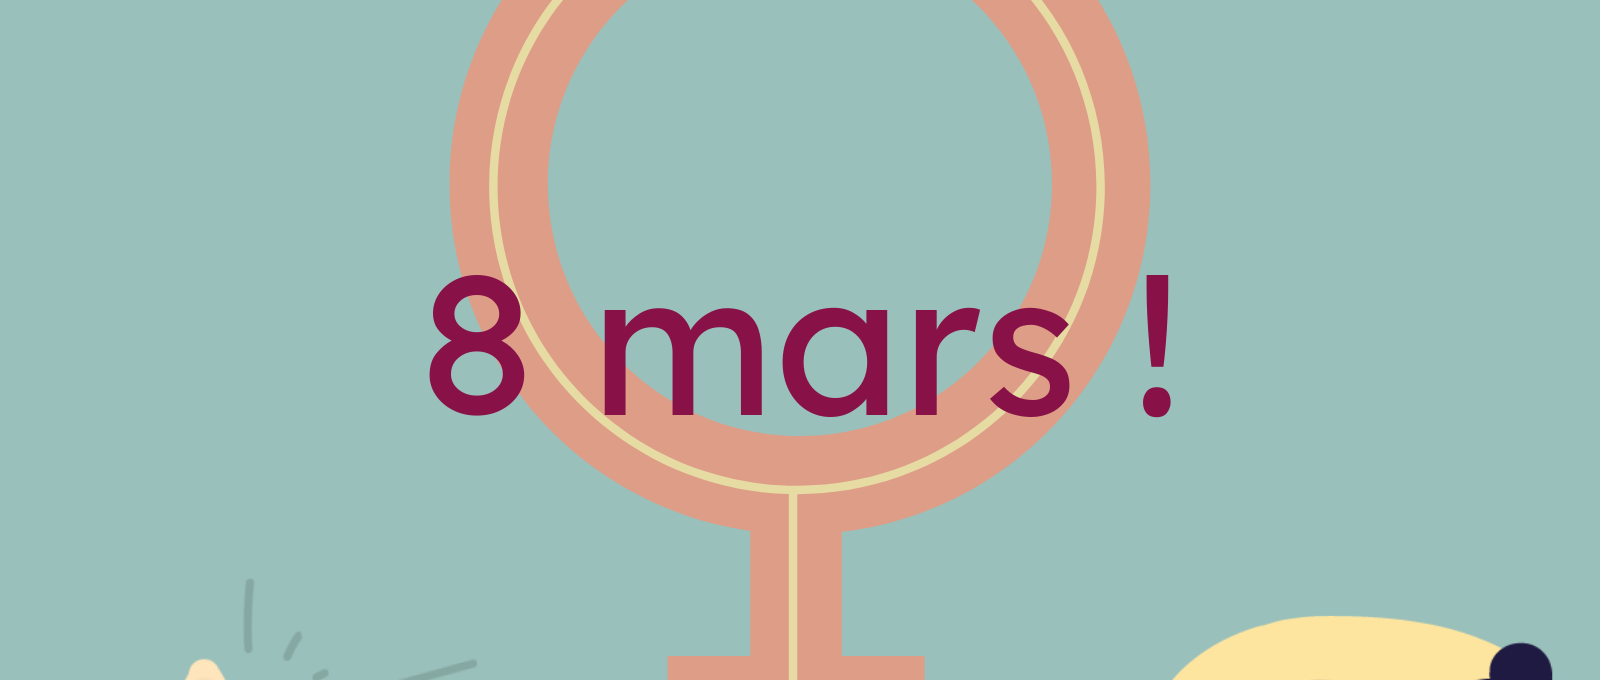 8 mars - femmes